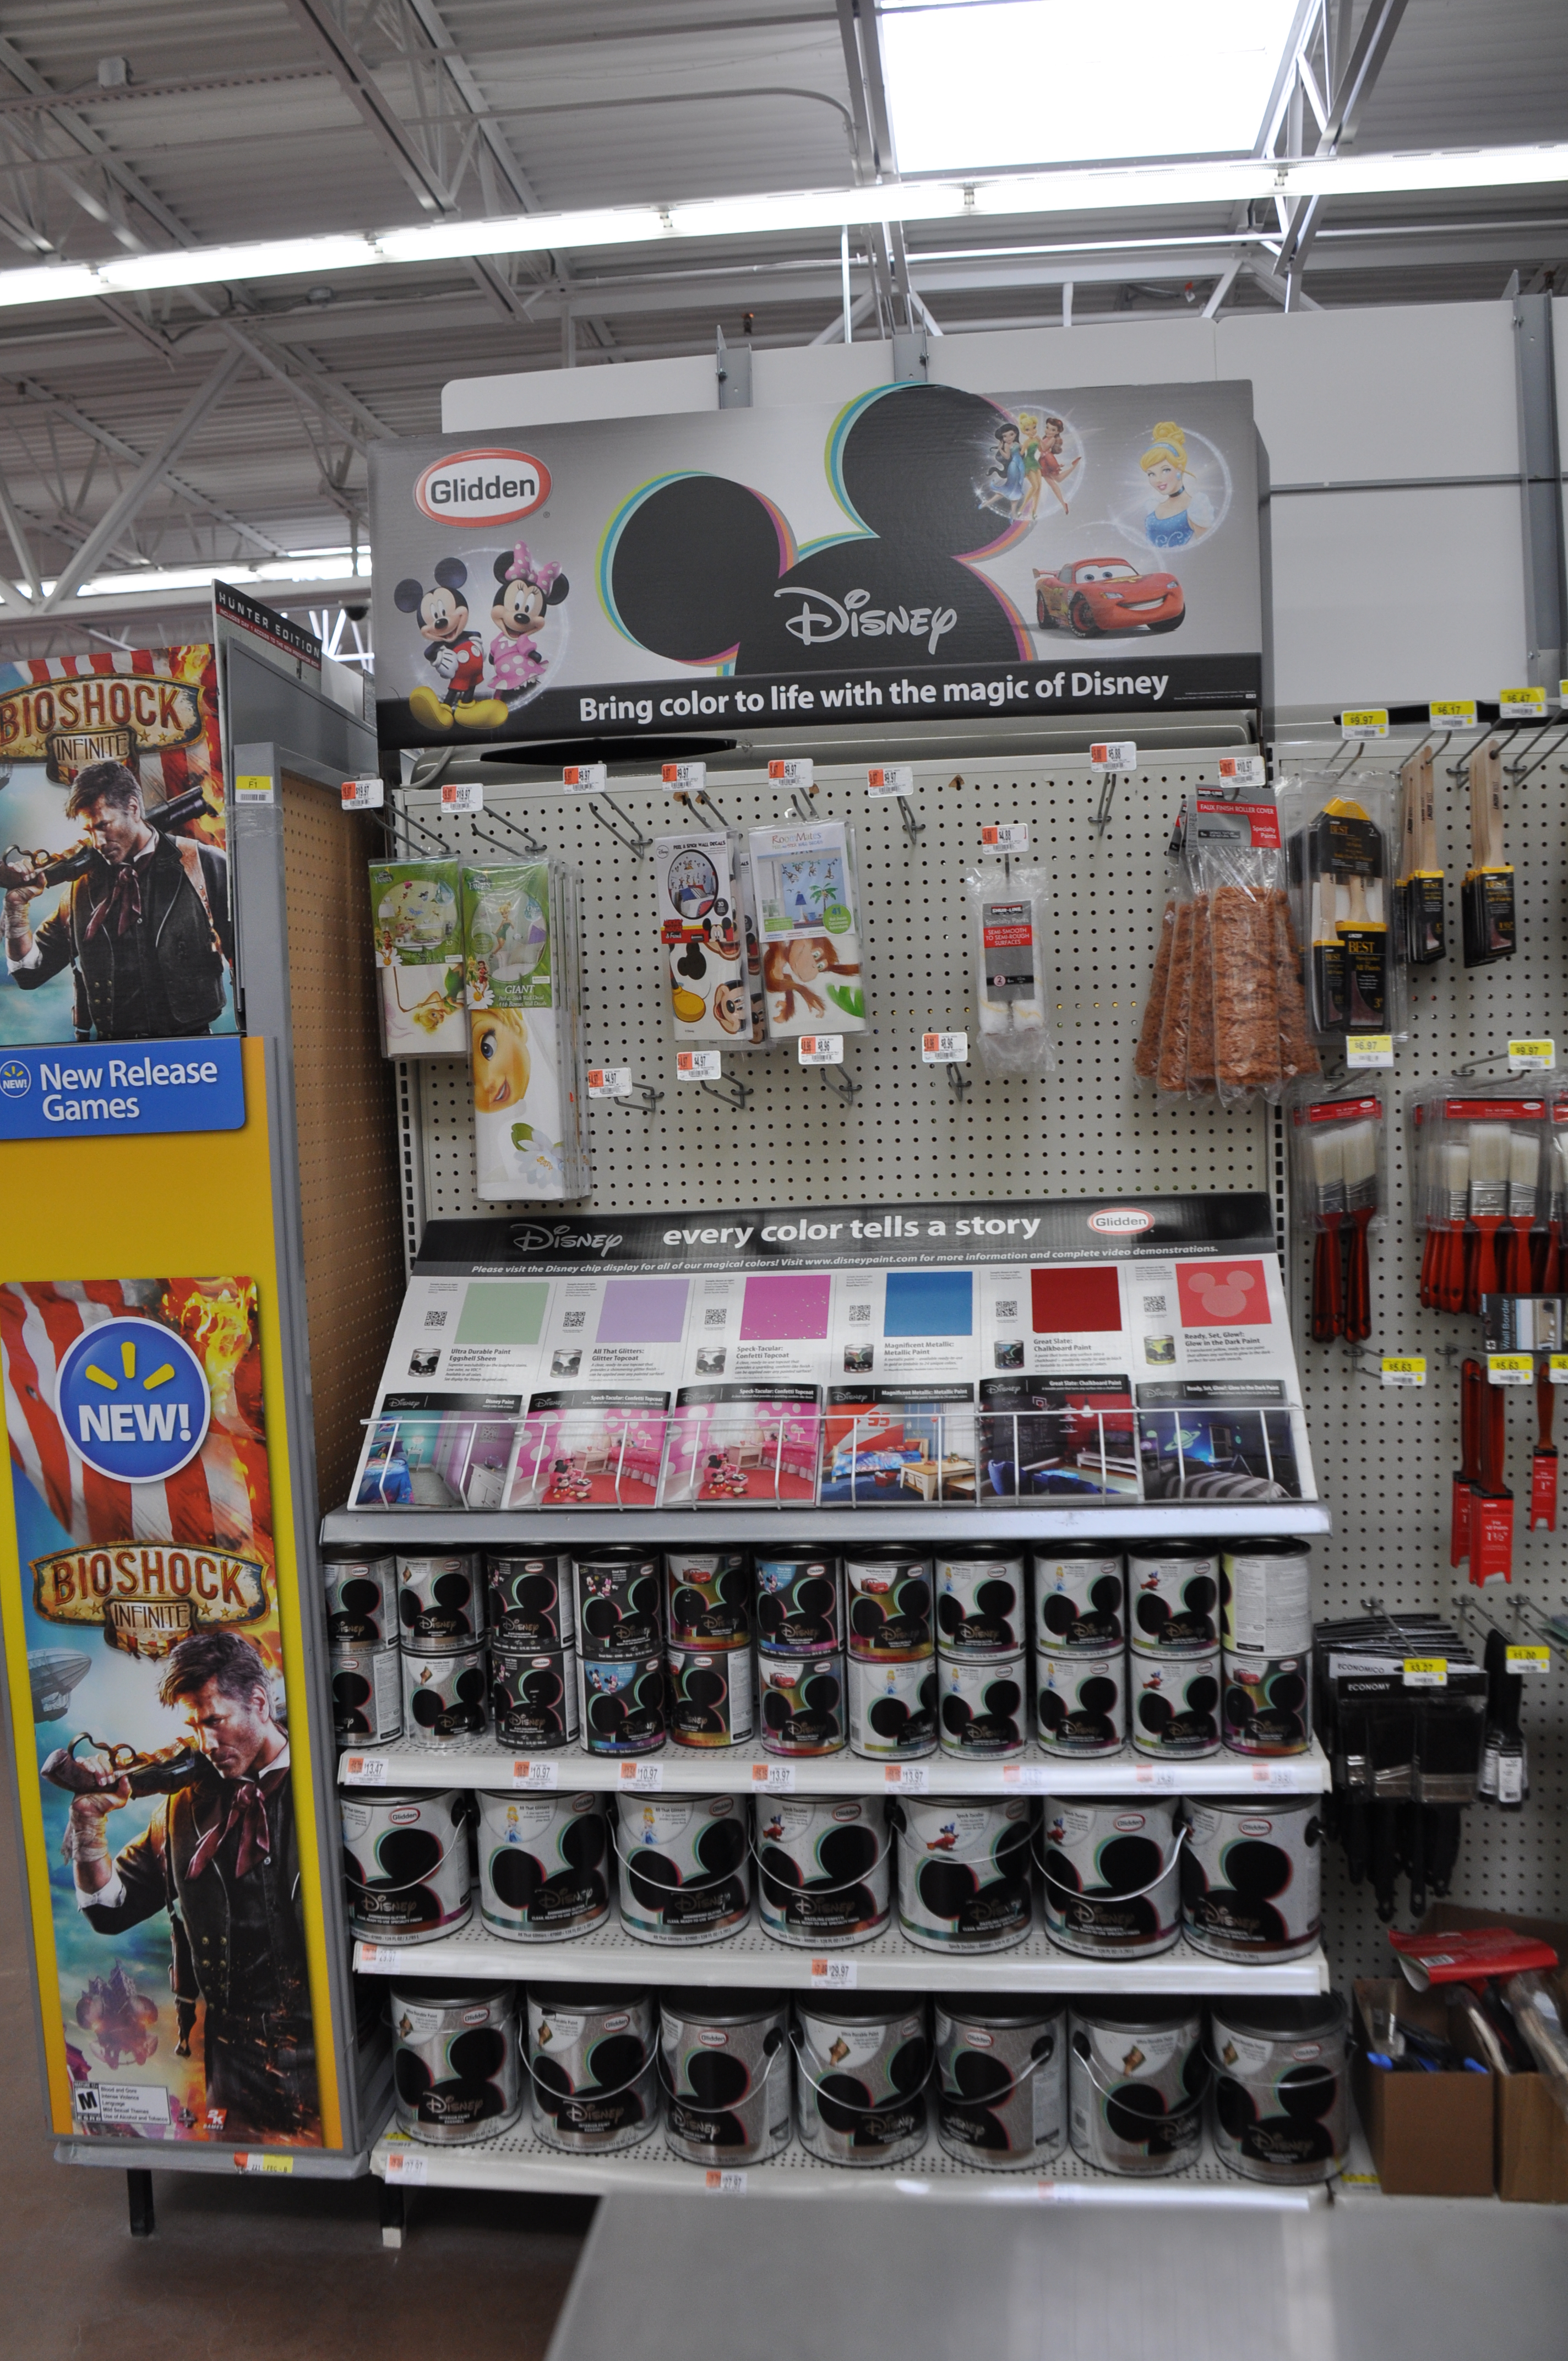 The extensive Disney Paint Display at Walmart.